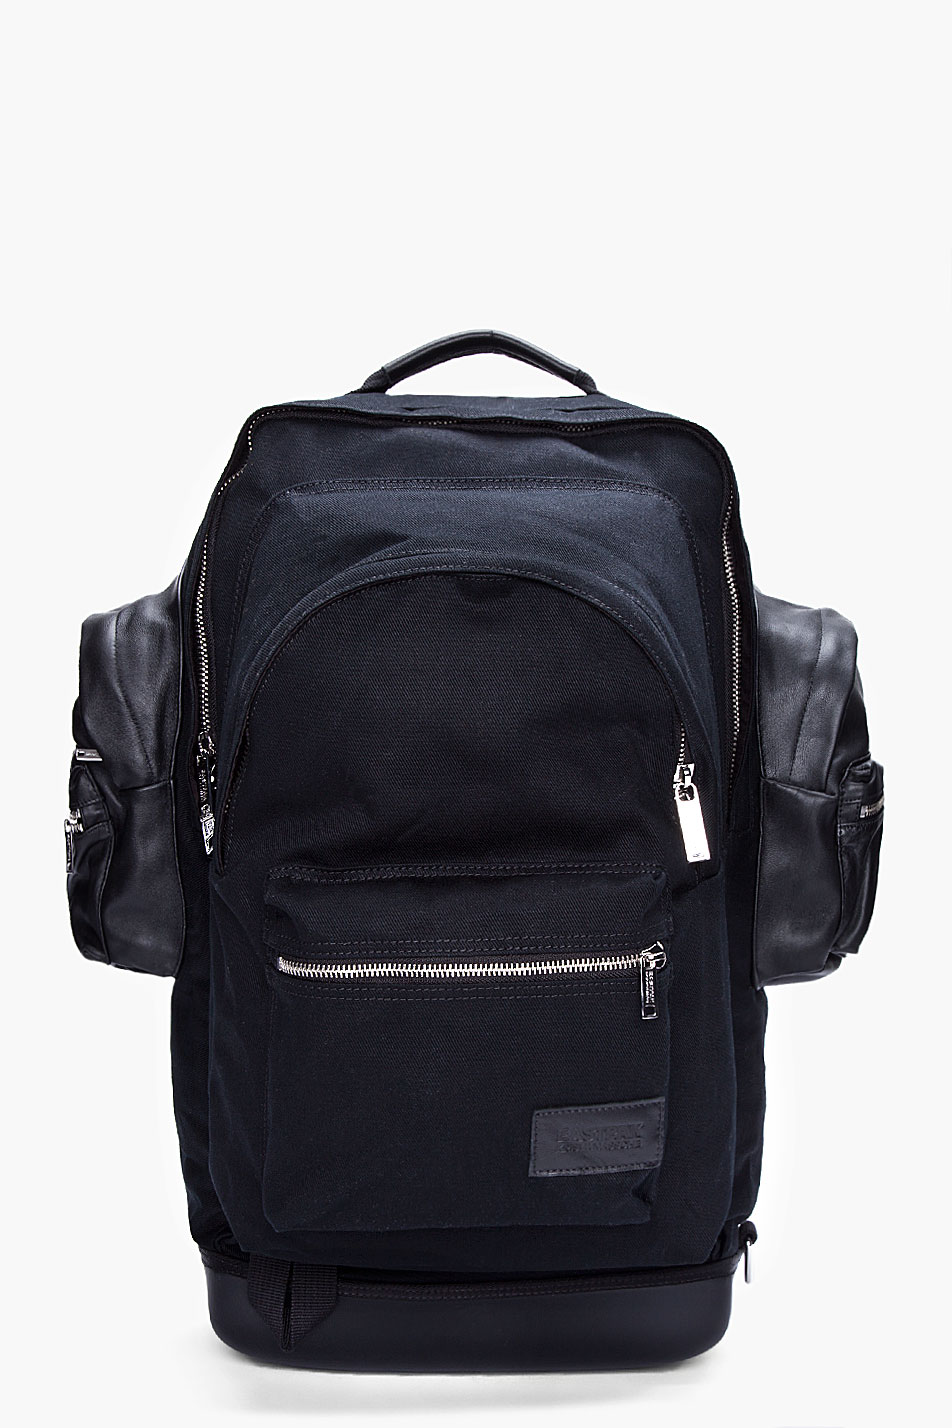 Kris Van Assche Black Xxl Hard Shell Base Backpack in Black for Men | Lyst